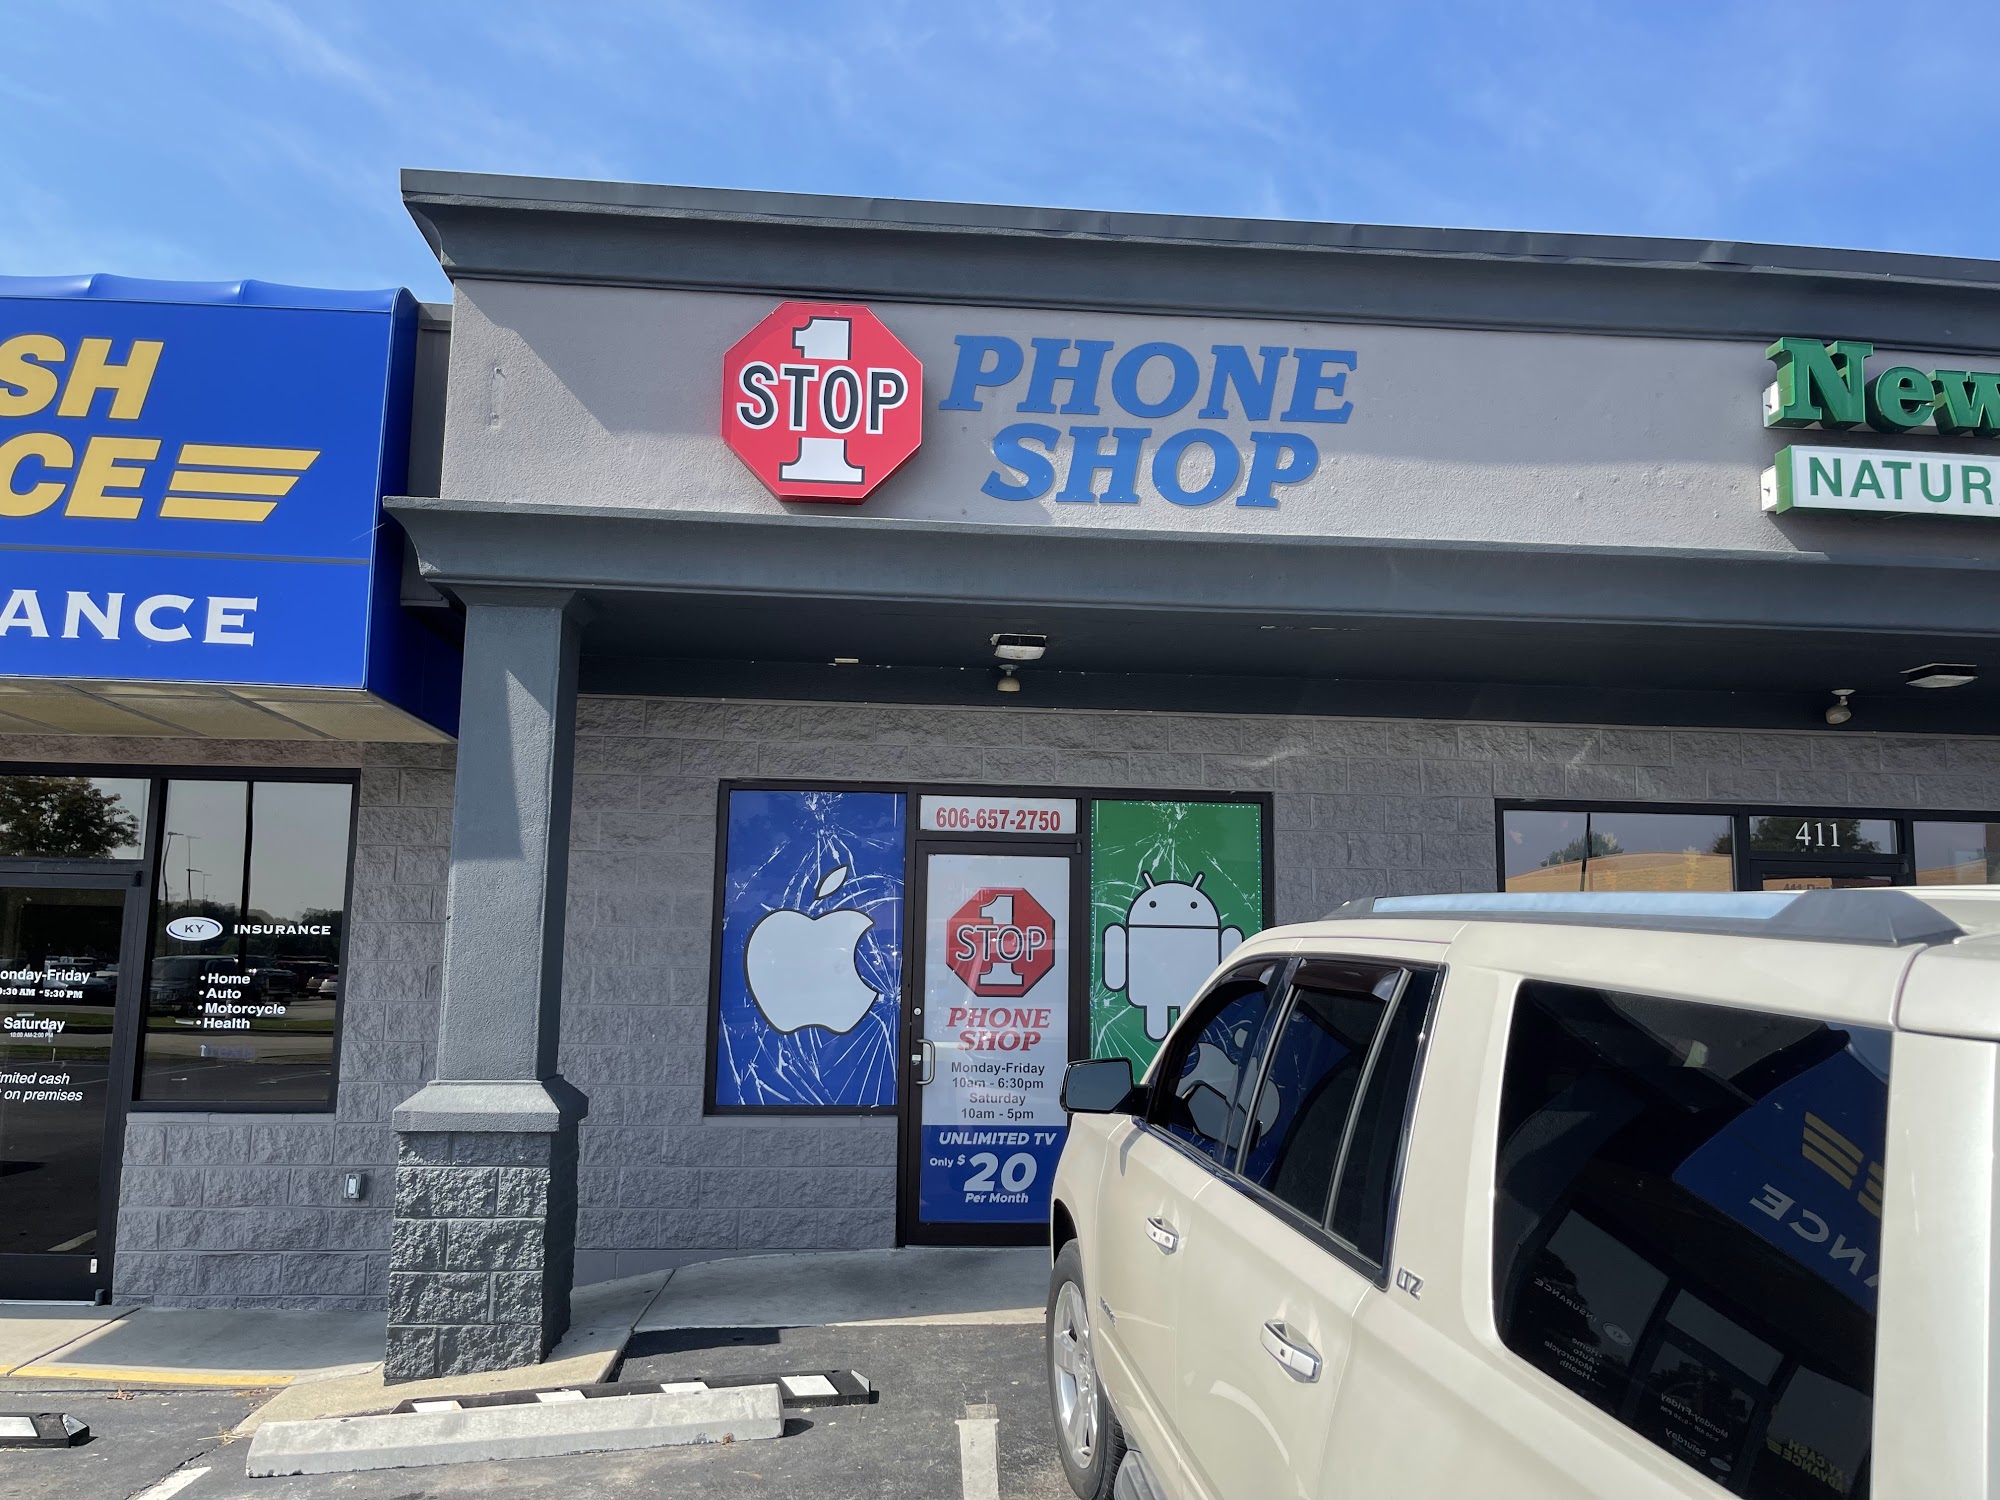 1 Stop Phone Shop